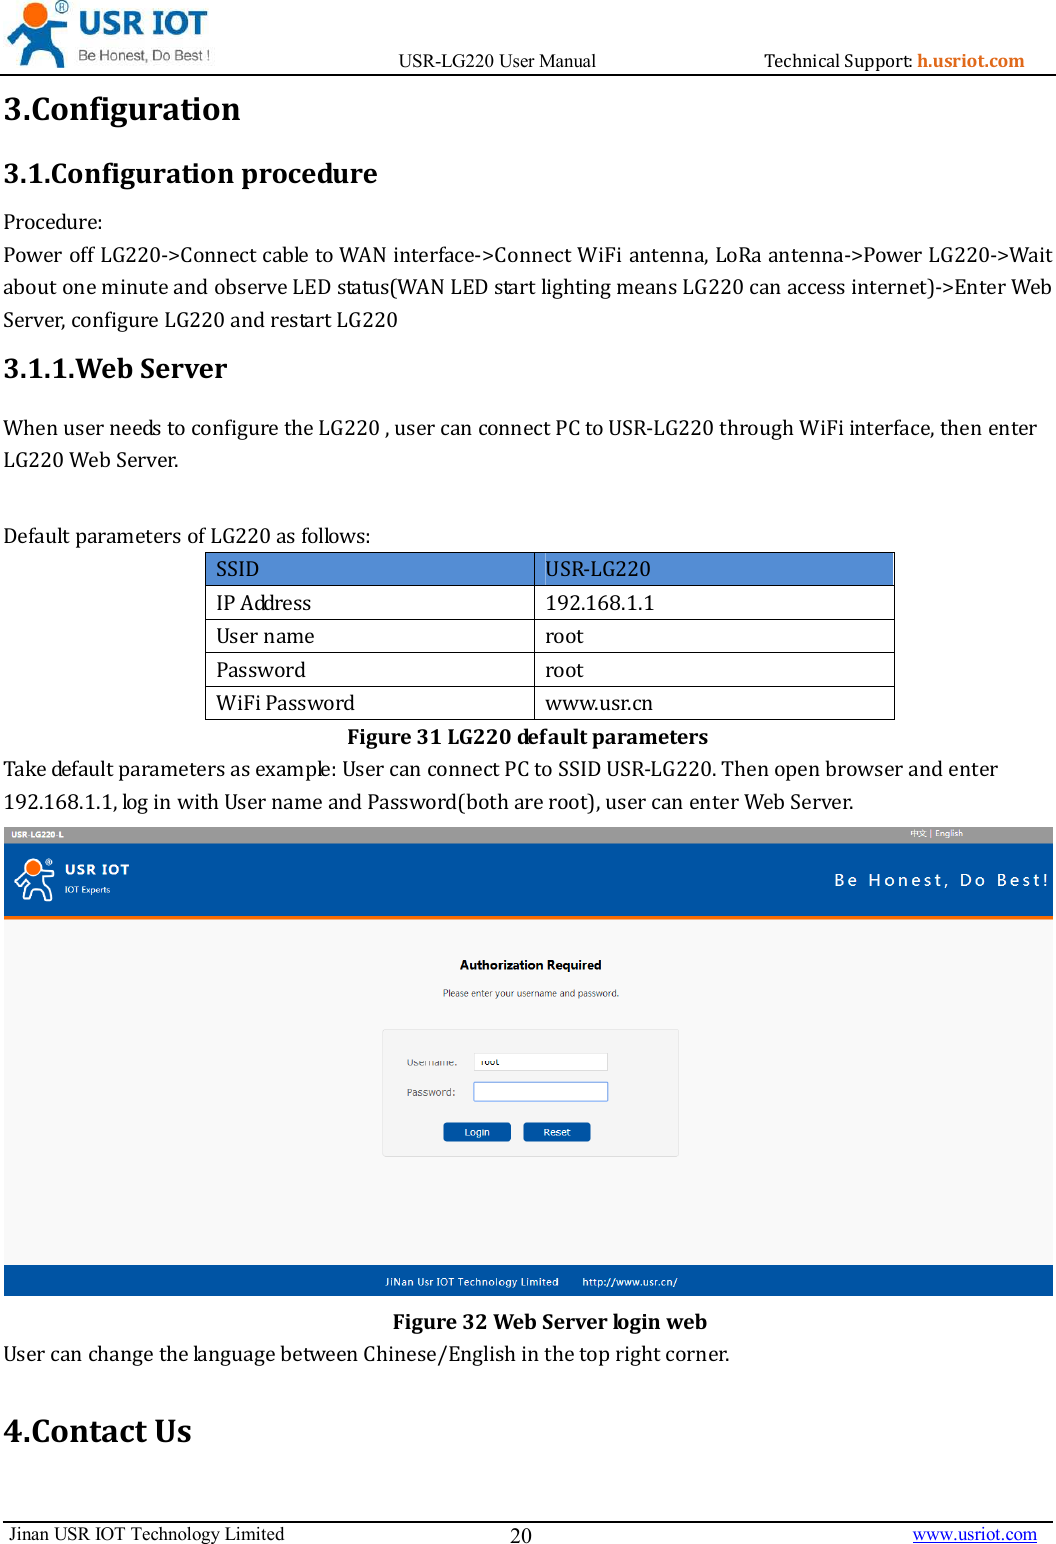                                       USR-LG220 User Manual                                    h.usriot.com    Jinan USR IOT Technology Limited                                                                                                                                      www.usriot.com 20 3.Configuration 3.1.Configuration procedure  (**L16-%/*L1-7L(L-6&quot; 60+,8-%/+,##&quot;:L+-607*# 3.1.1.Web Server - *#71#-*7-60,*&quot;**(),  )%   ?=&quot; (  -(  (((Figure 31 LG220 default parameters . *&quot;@&quot;1),6( ?=7#(&quot; ( 86:7-60 Figure 32 Web Server login web ###6(19+##4.Contact Us 